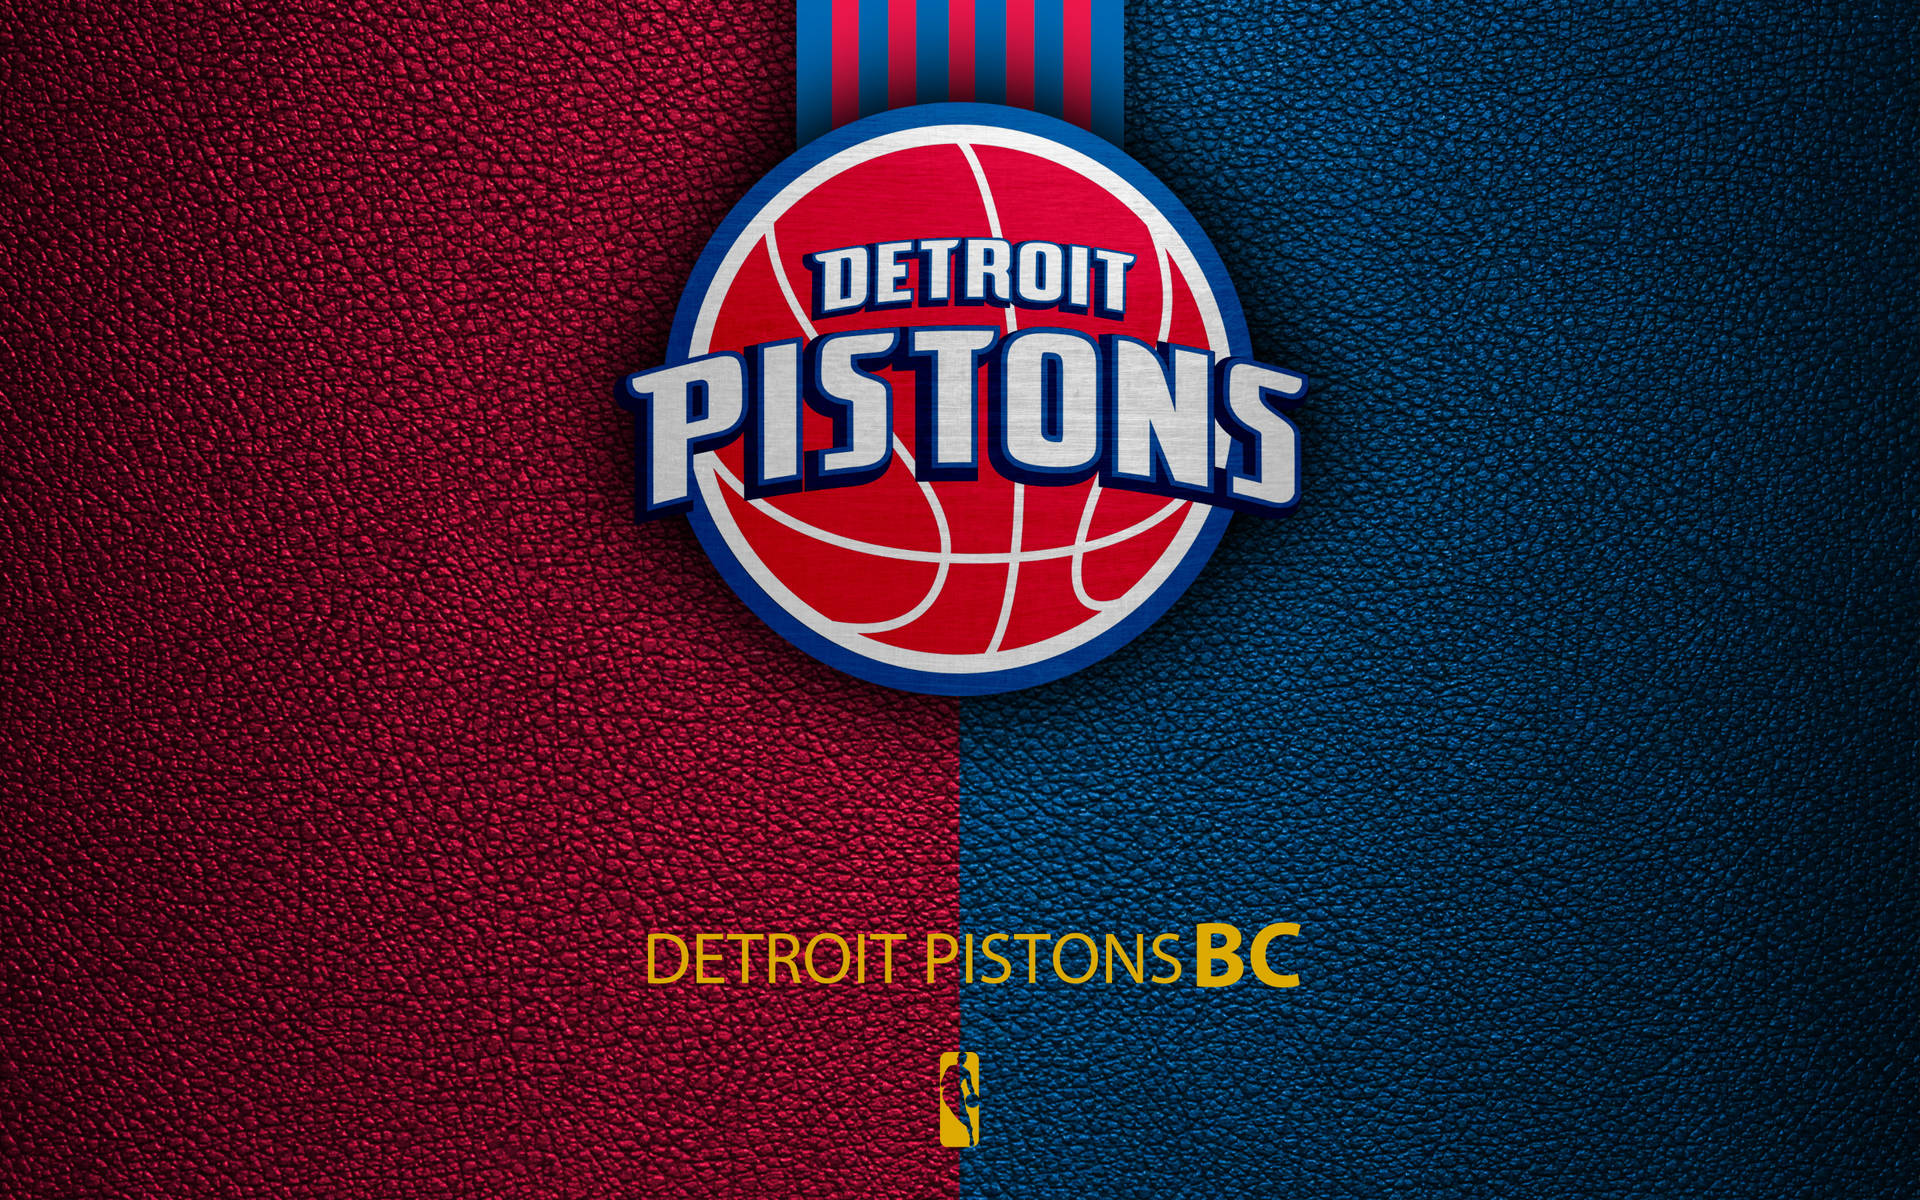 Detroit Pistons Textured Logo Wallpaper